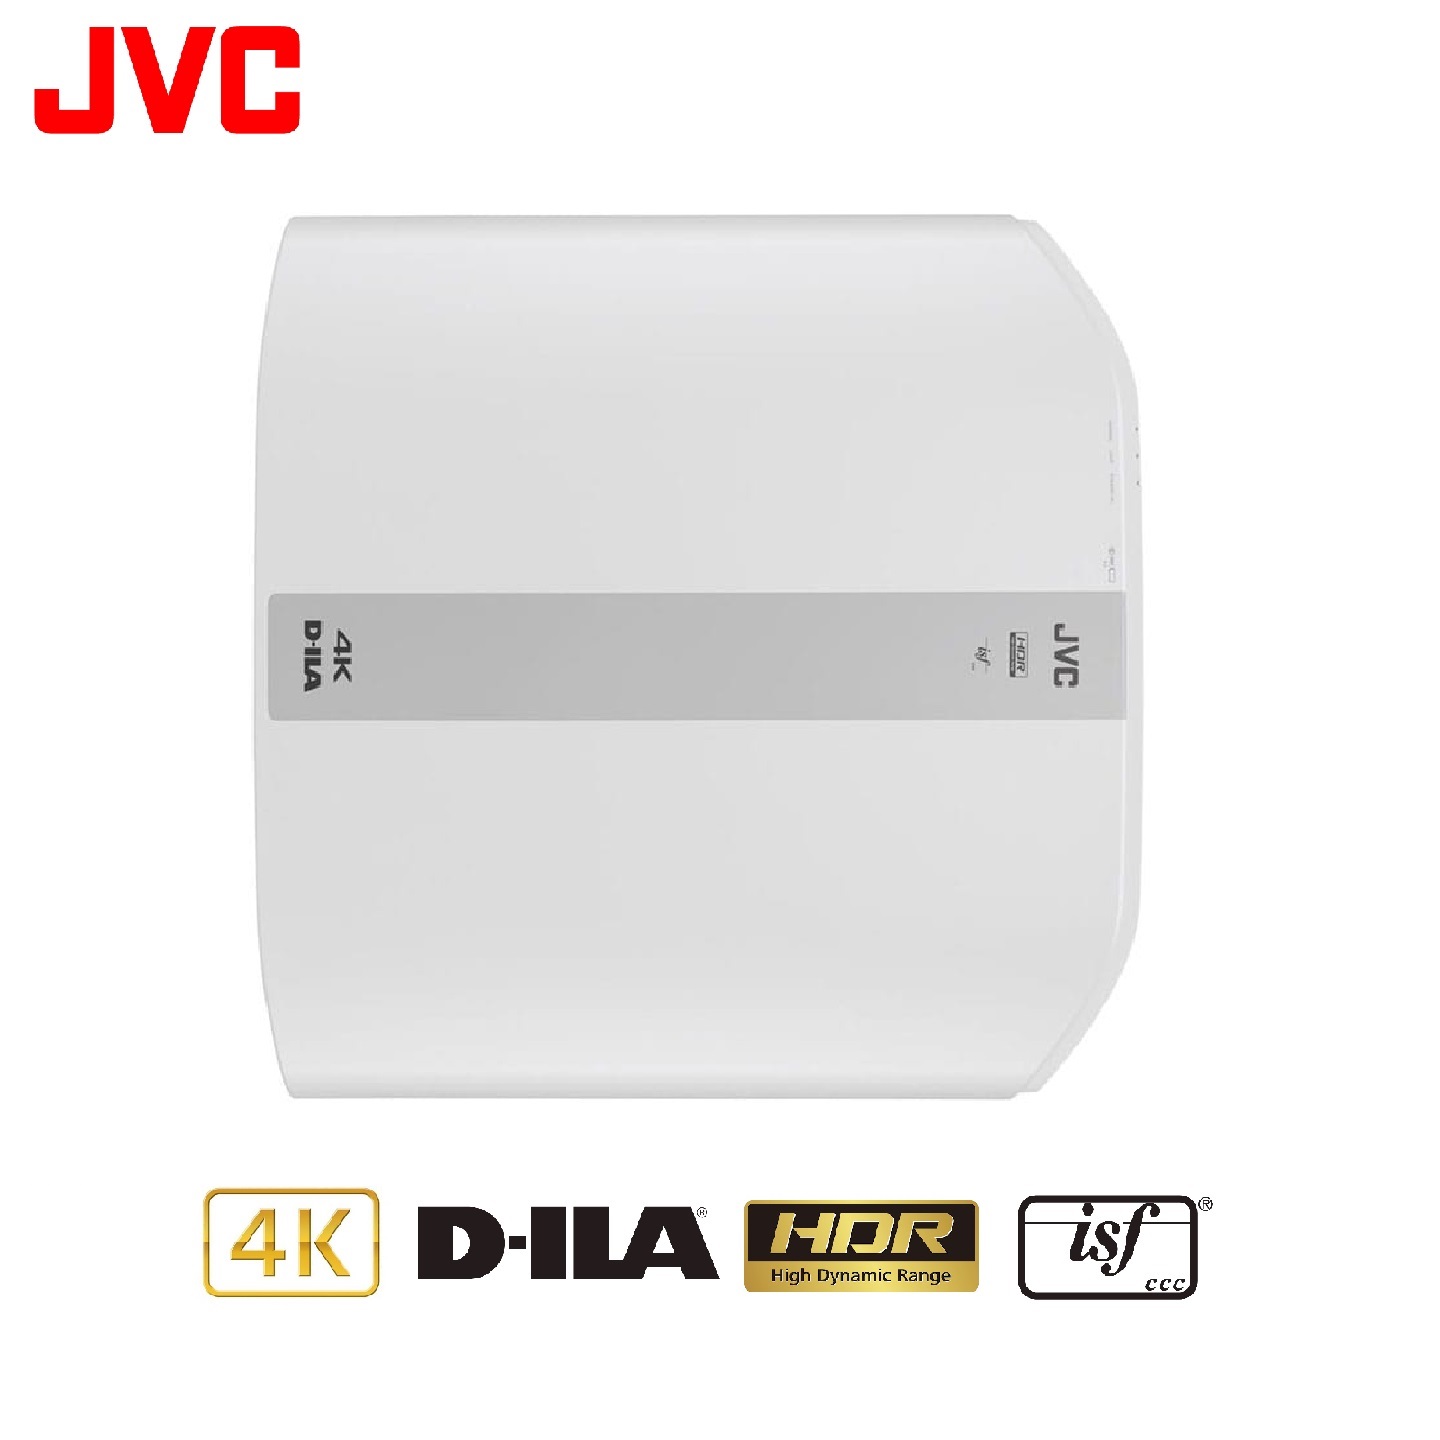 JVC DLA-N5W 原生4K 家庭劇院投影機-白